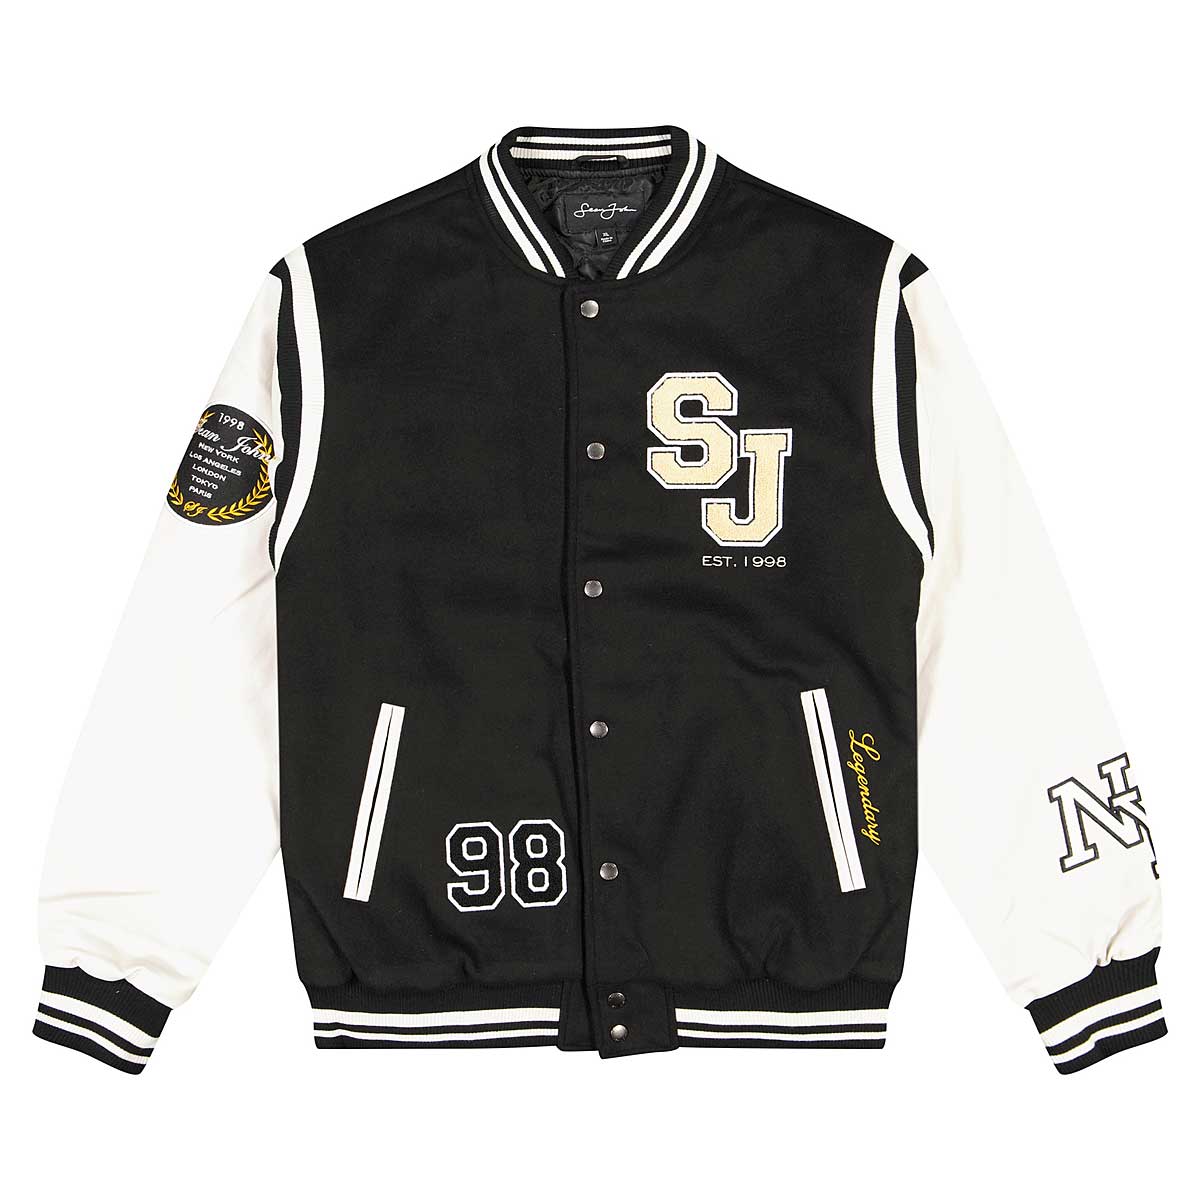 Sean John Sj Legendary College Jacket, Black/Off-White